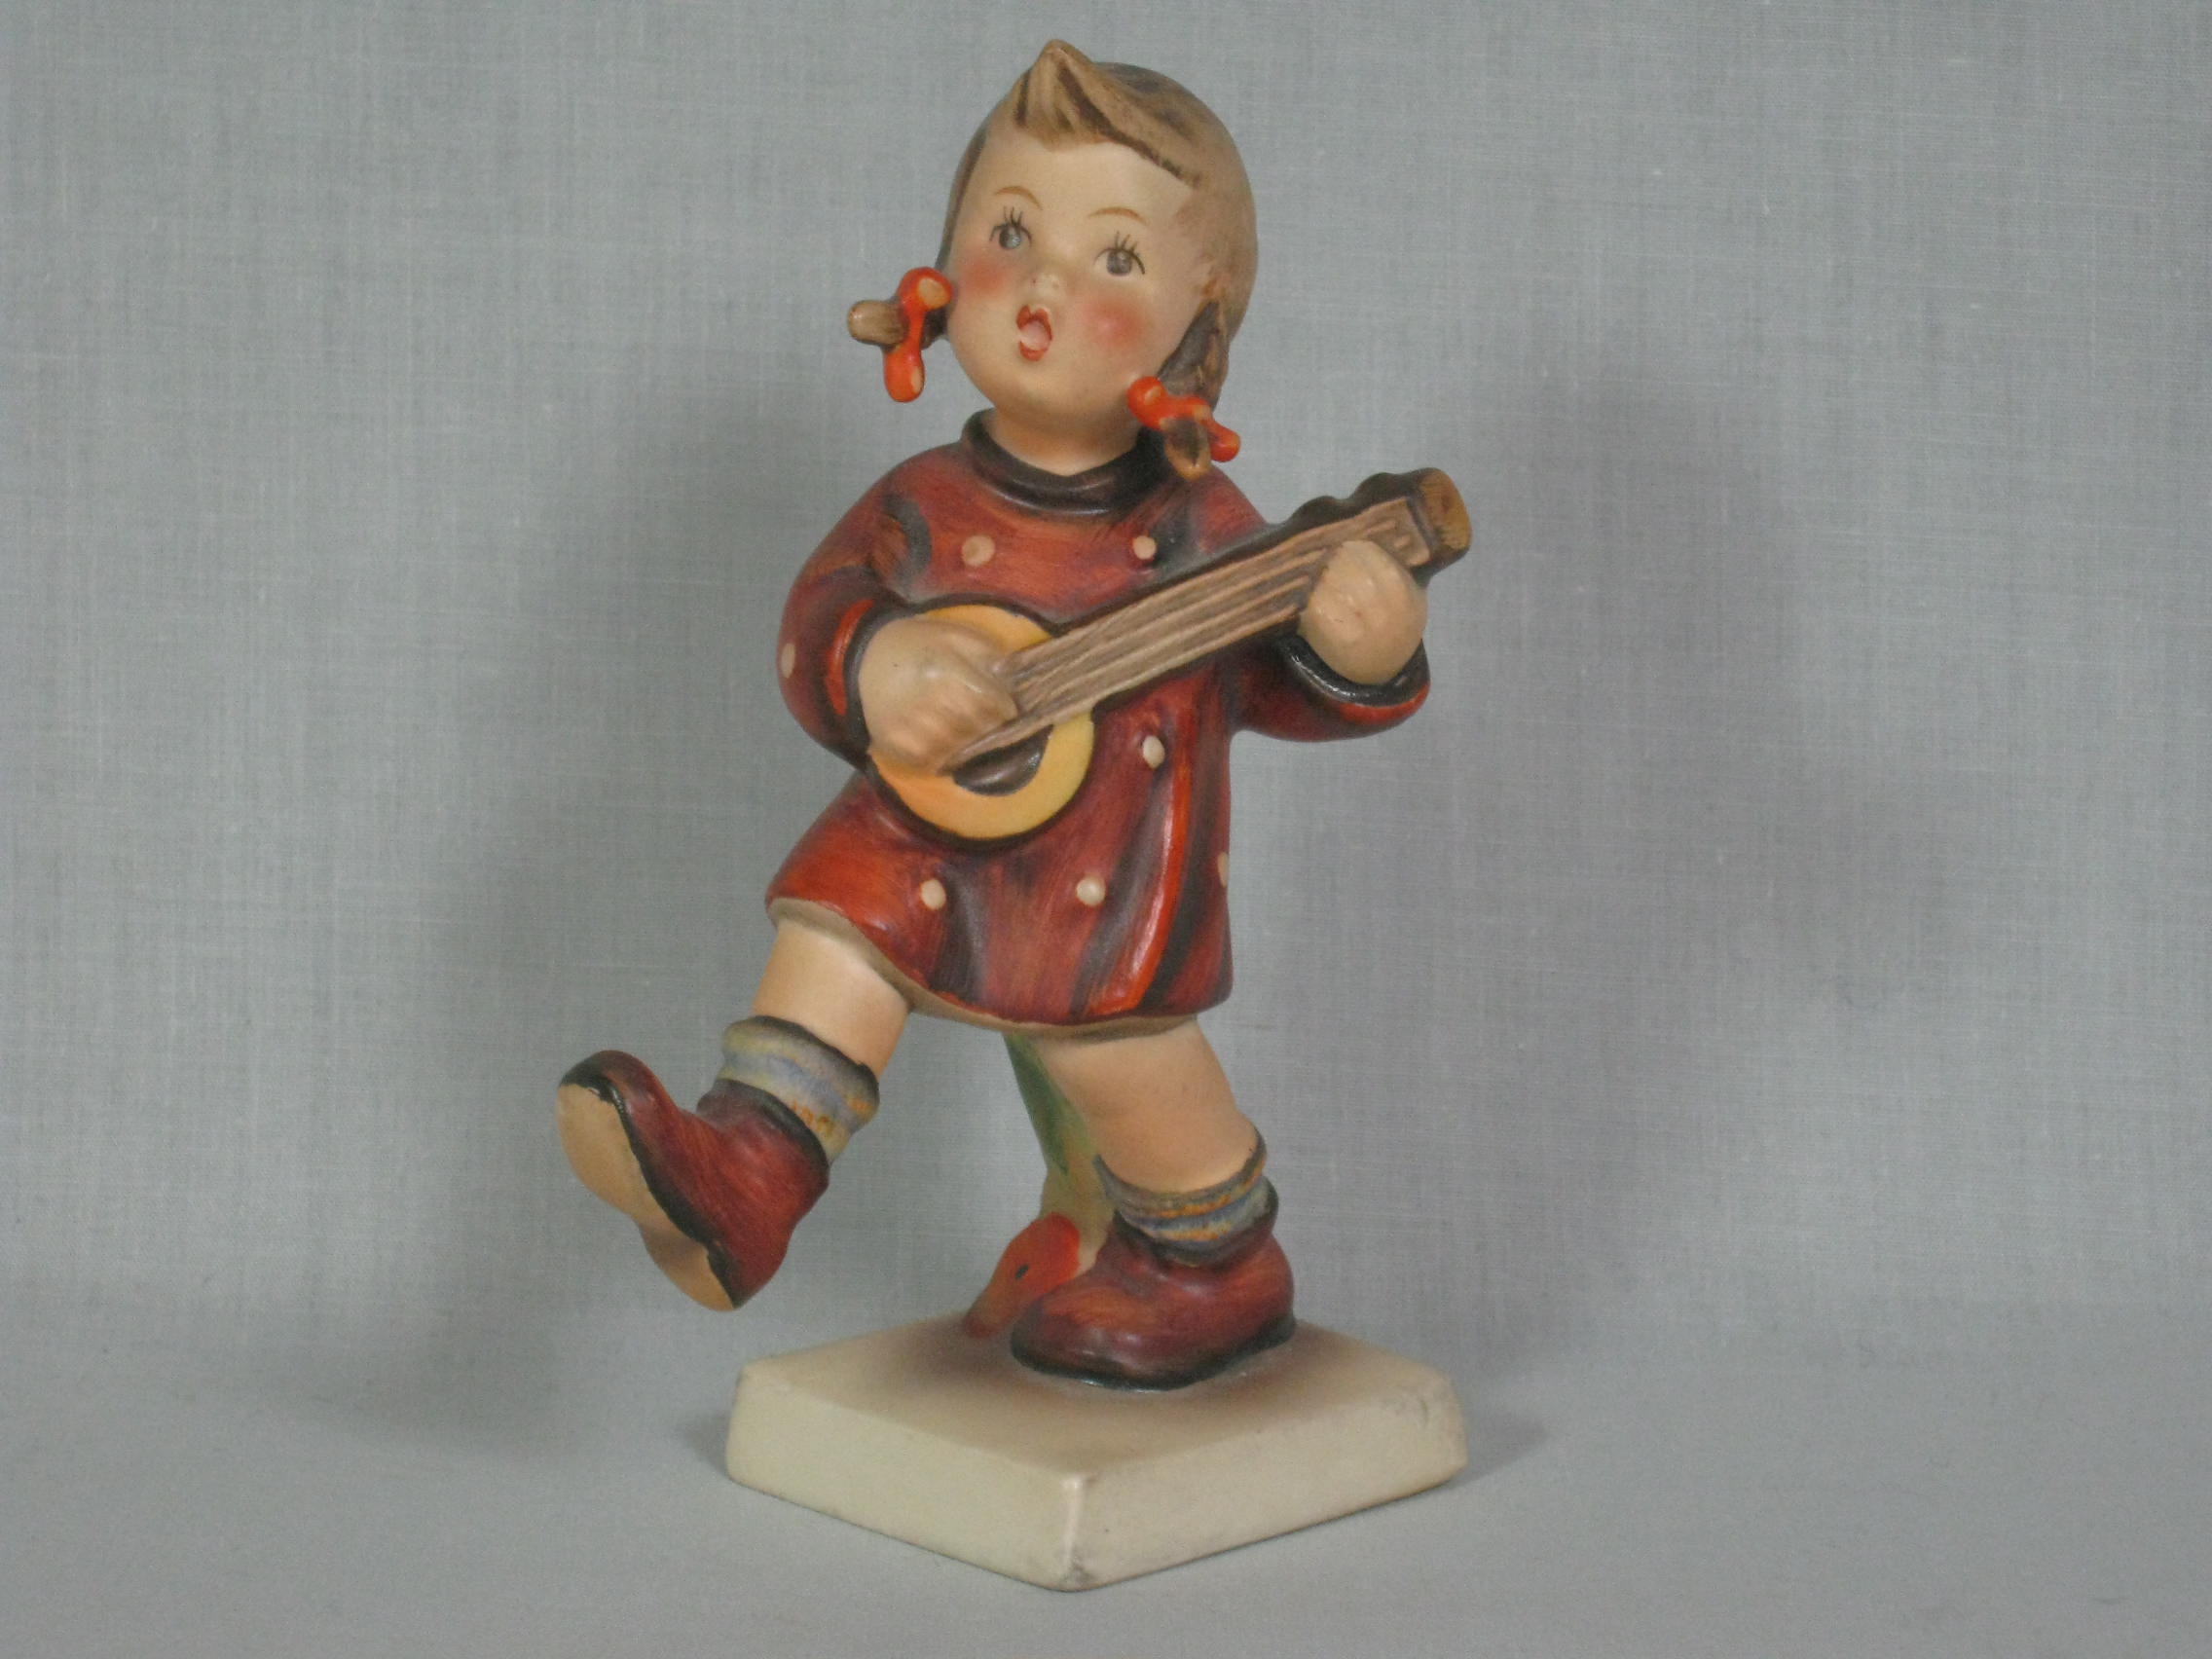 Vintage Hummel Figurine Happiness 86 TMK-2 Girl With Banjo Full Bee Mark Germany